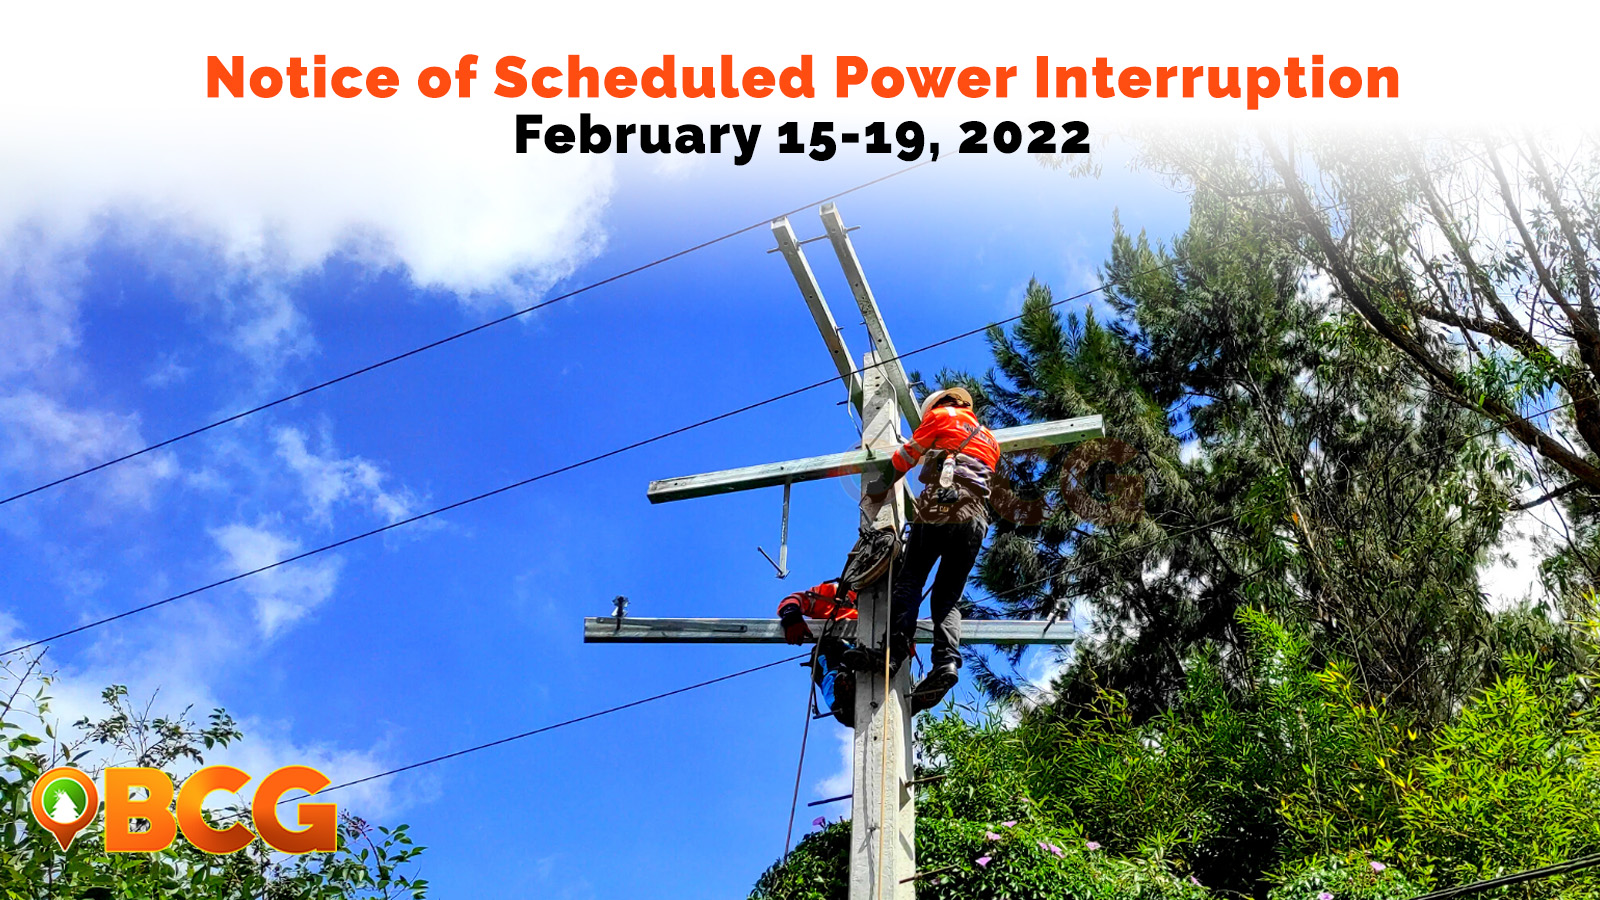 Beneco Power Interruption February 8-15, 2022